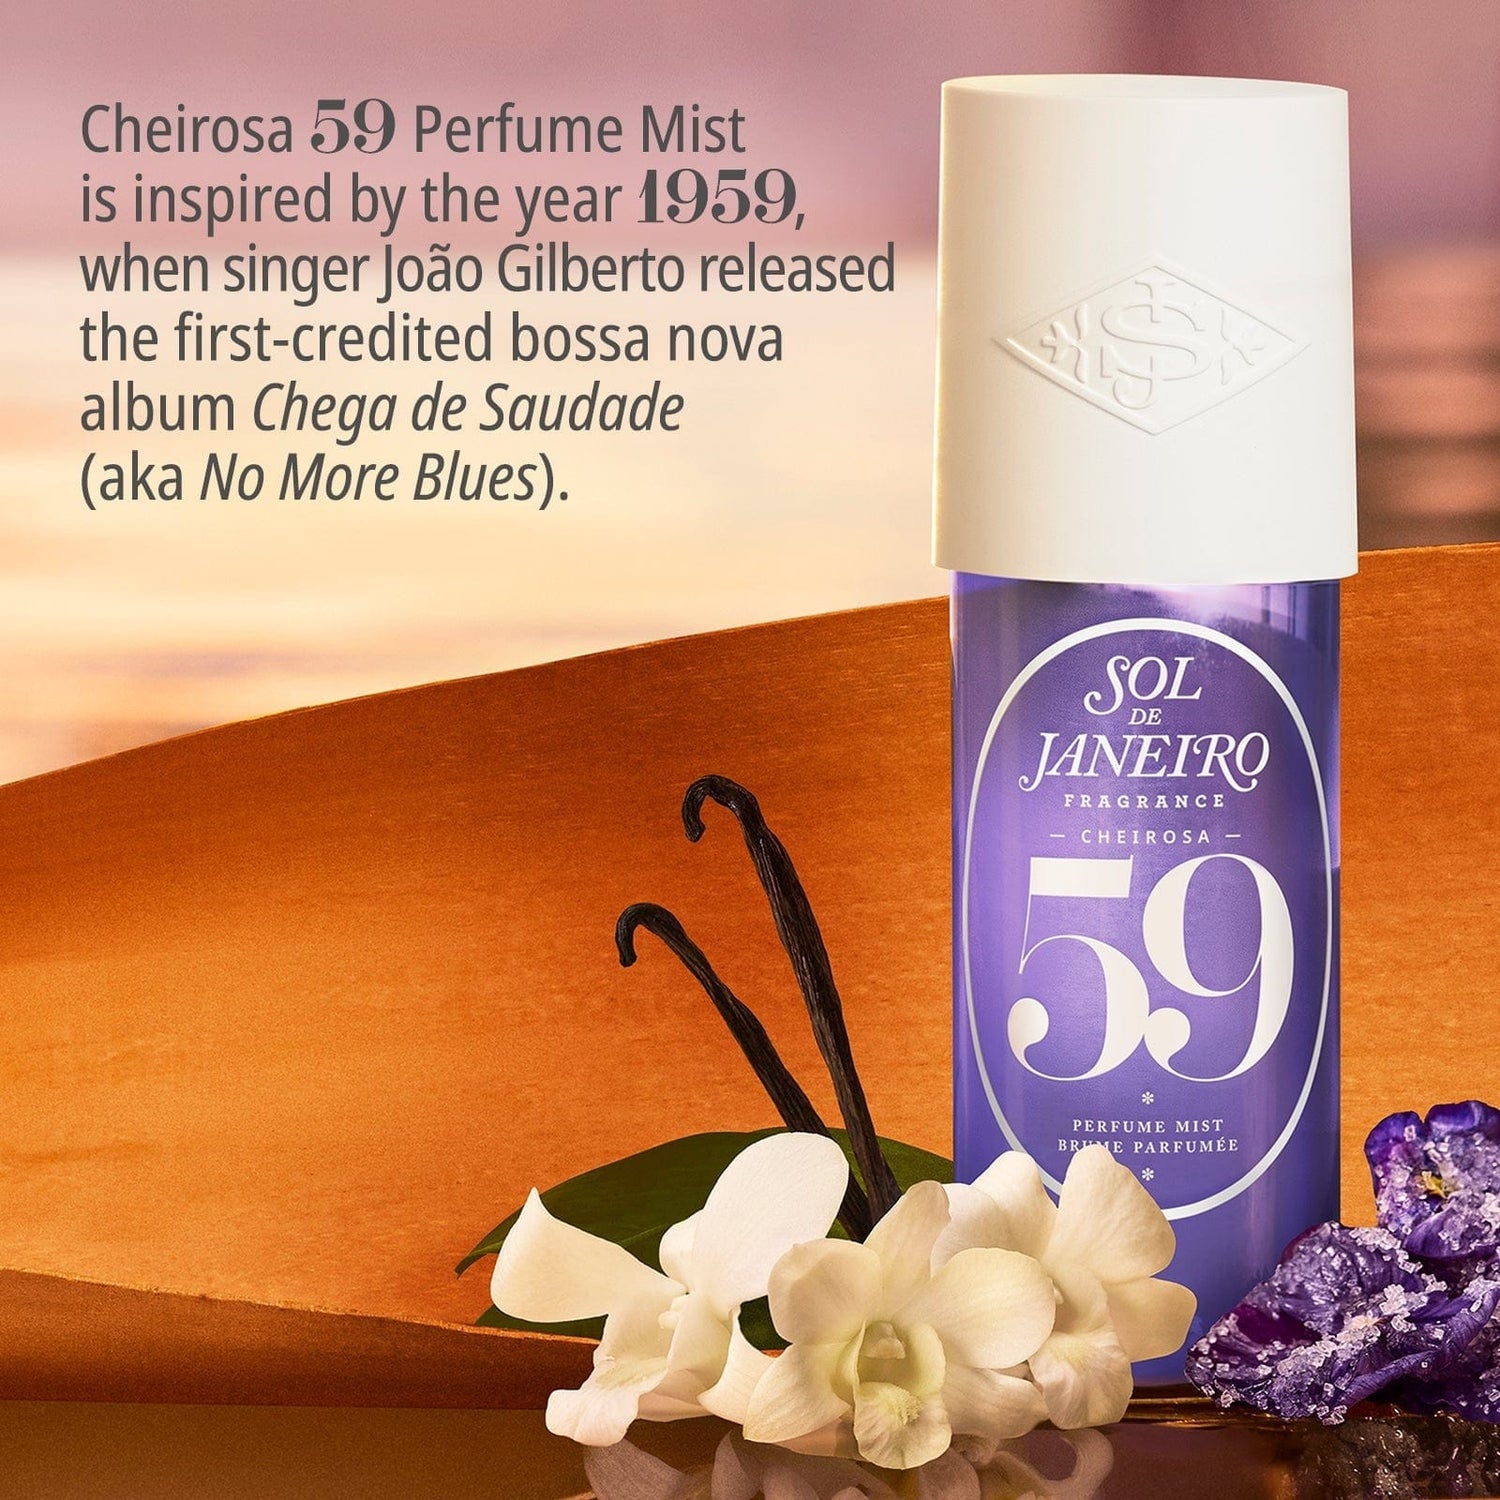 Cheirosa 59 perfume mist is inspired by the year 1959, when singer Joao Gilberto released the first-credited bosa nova album Chega de Saudade (aka No More Blues).